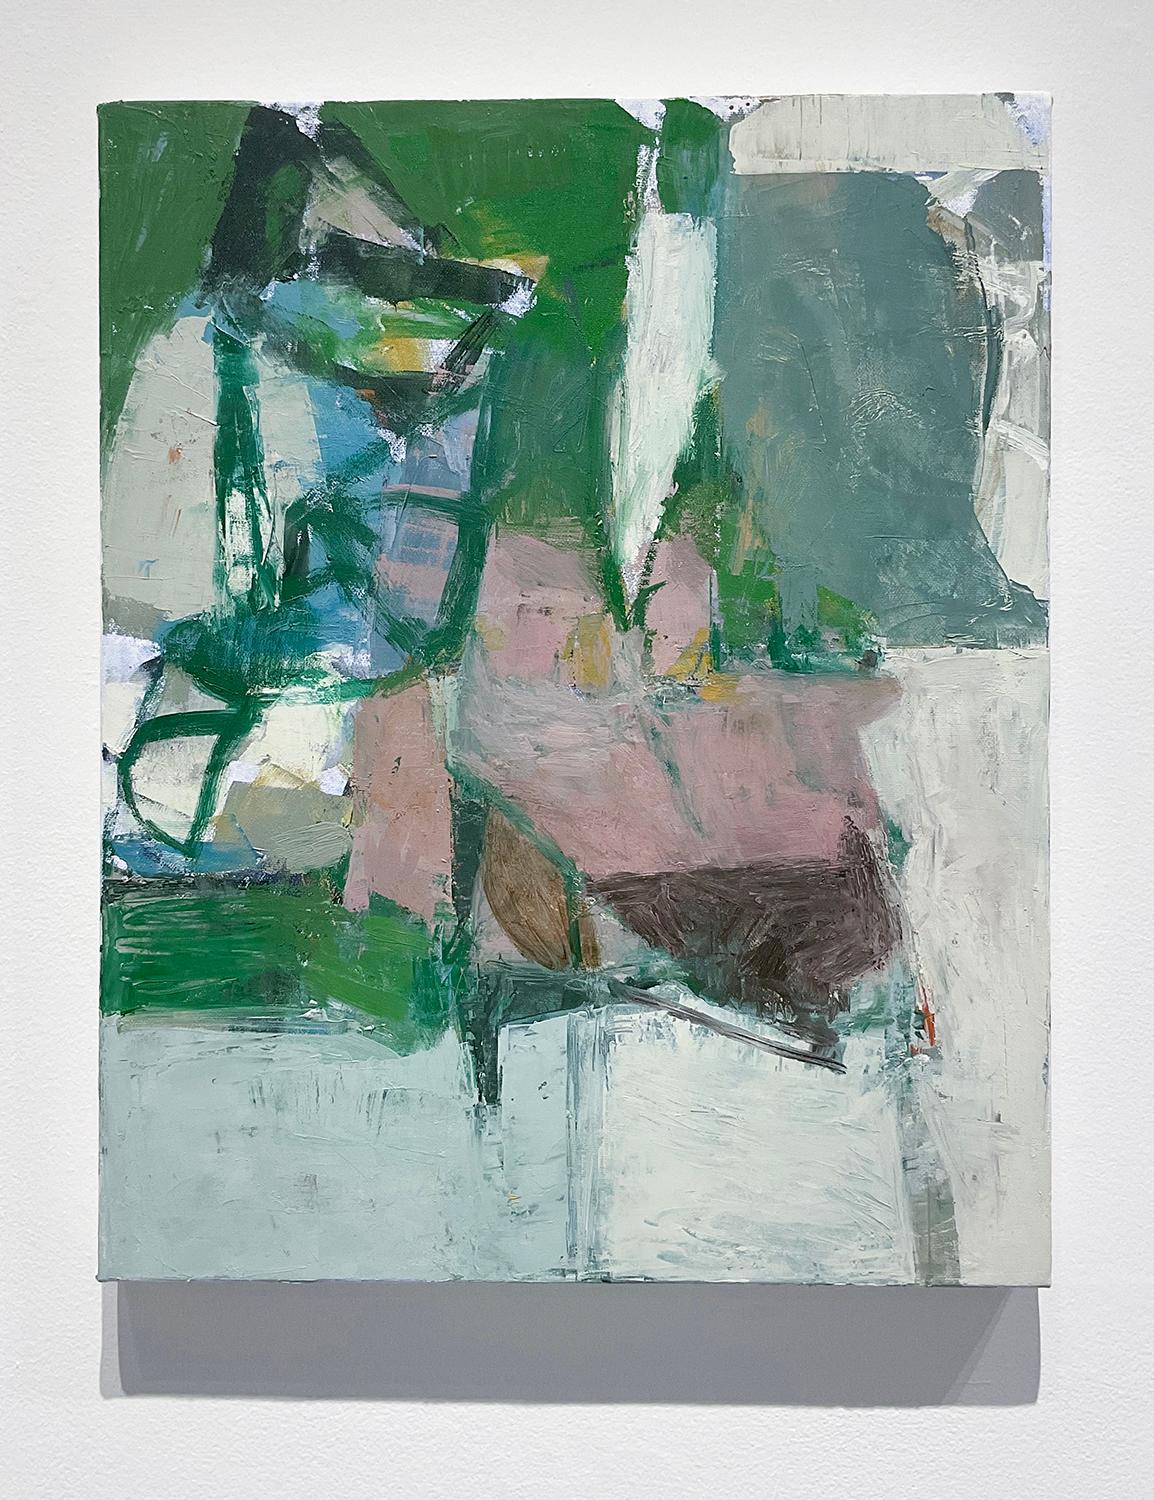 Was Do I Know of This Place 3 (Vertikales abstraktes expressionistisches Ölgemälde auf Leinwand)  (Abstrakter Expressionismus), Painting, von Jenny Nelson